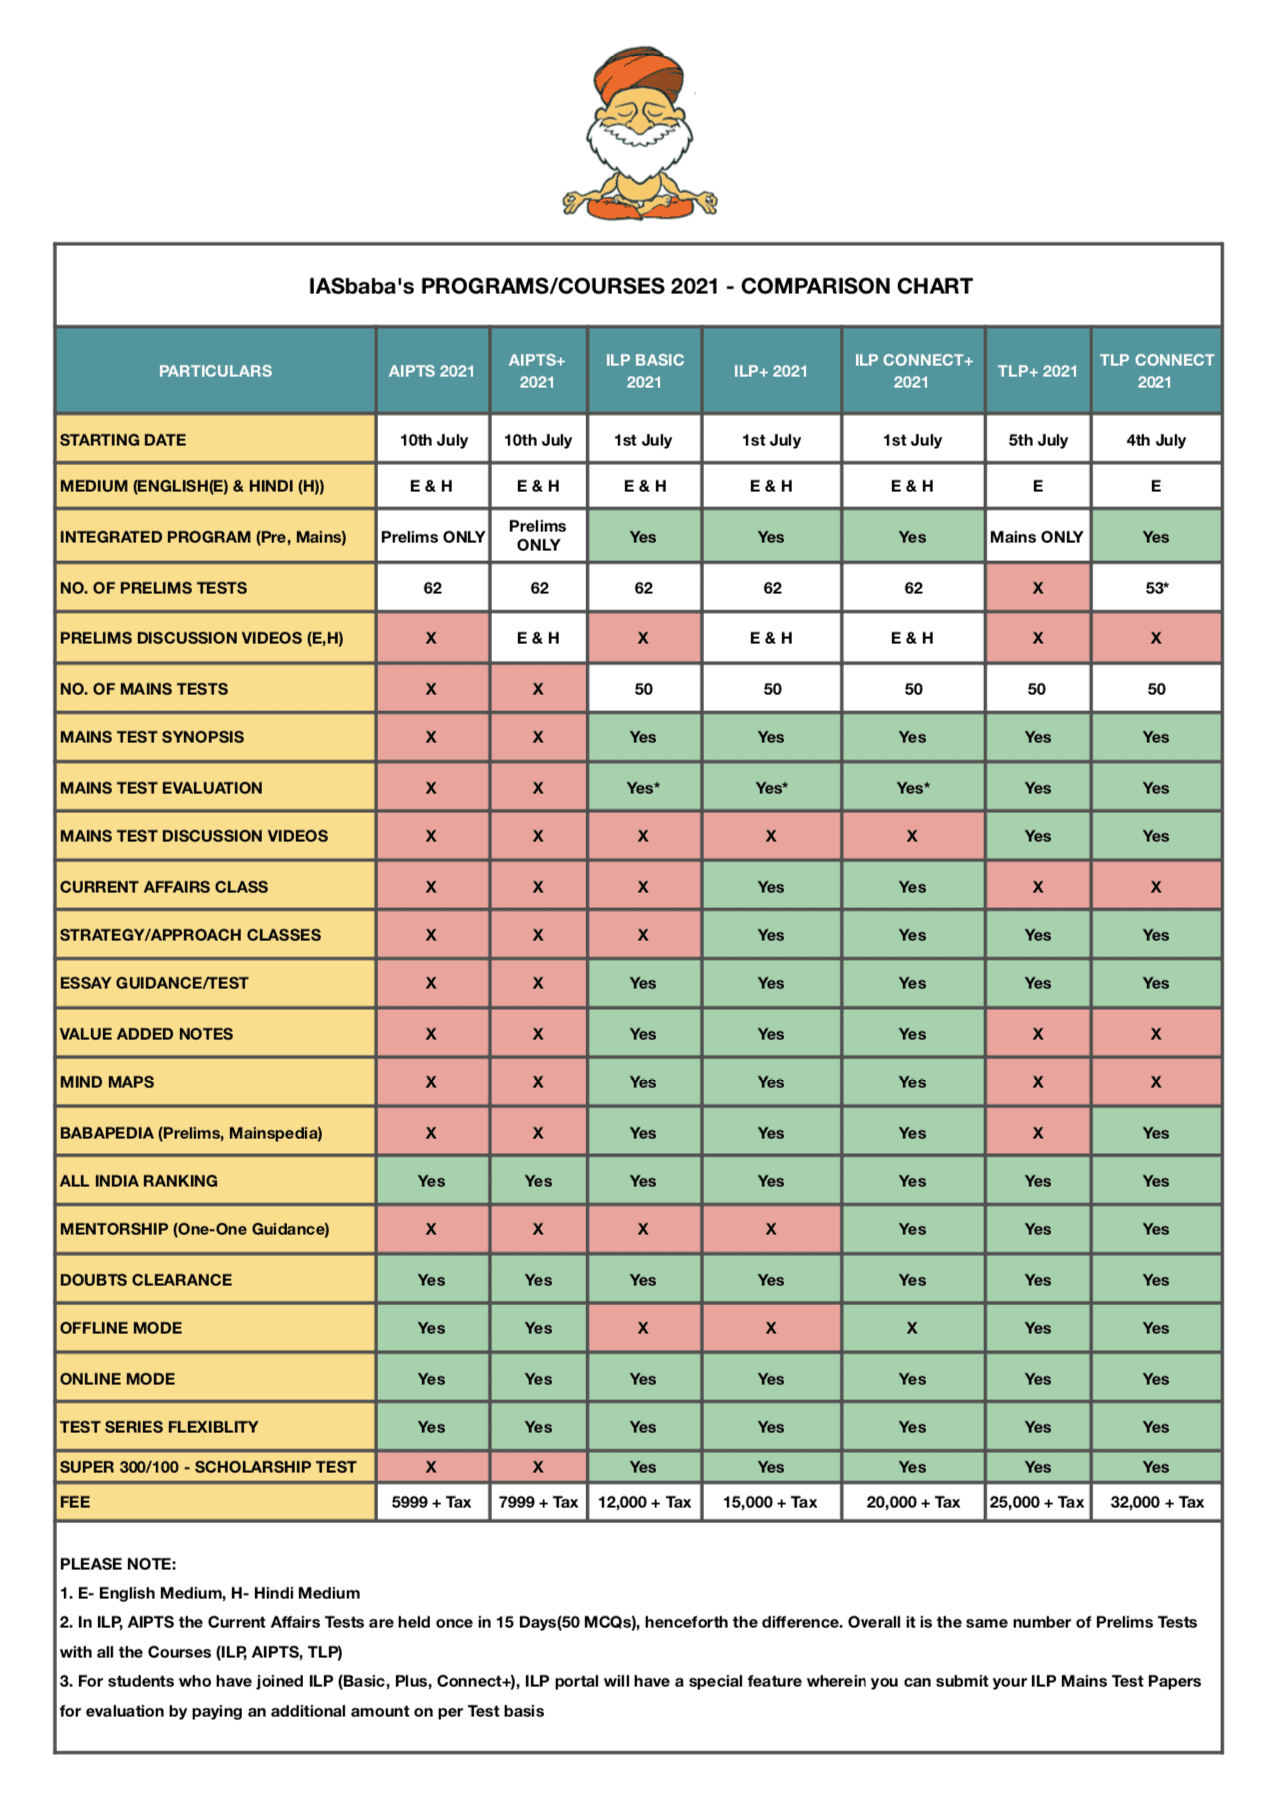 IASbaba Courses 2021 Comparison Chart